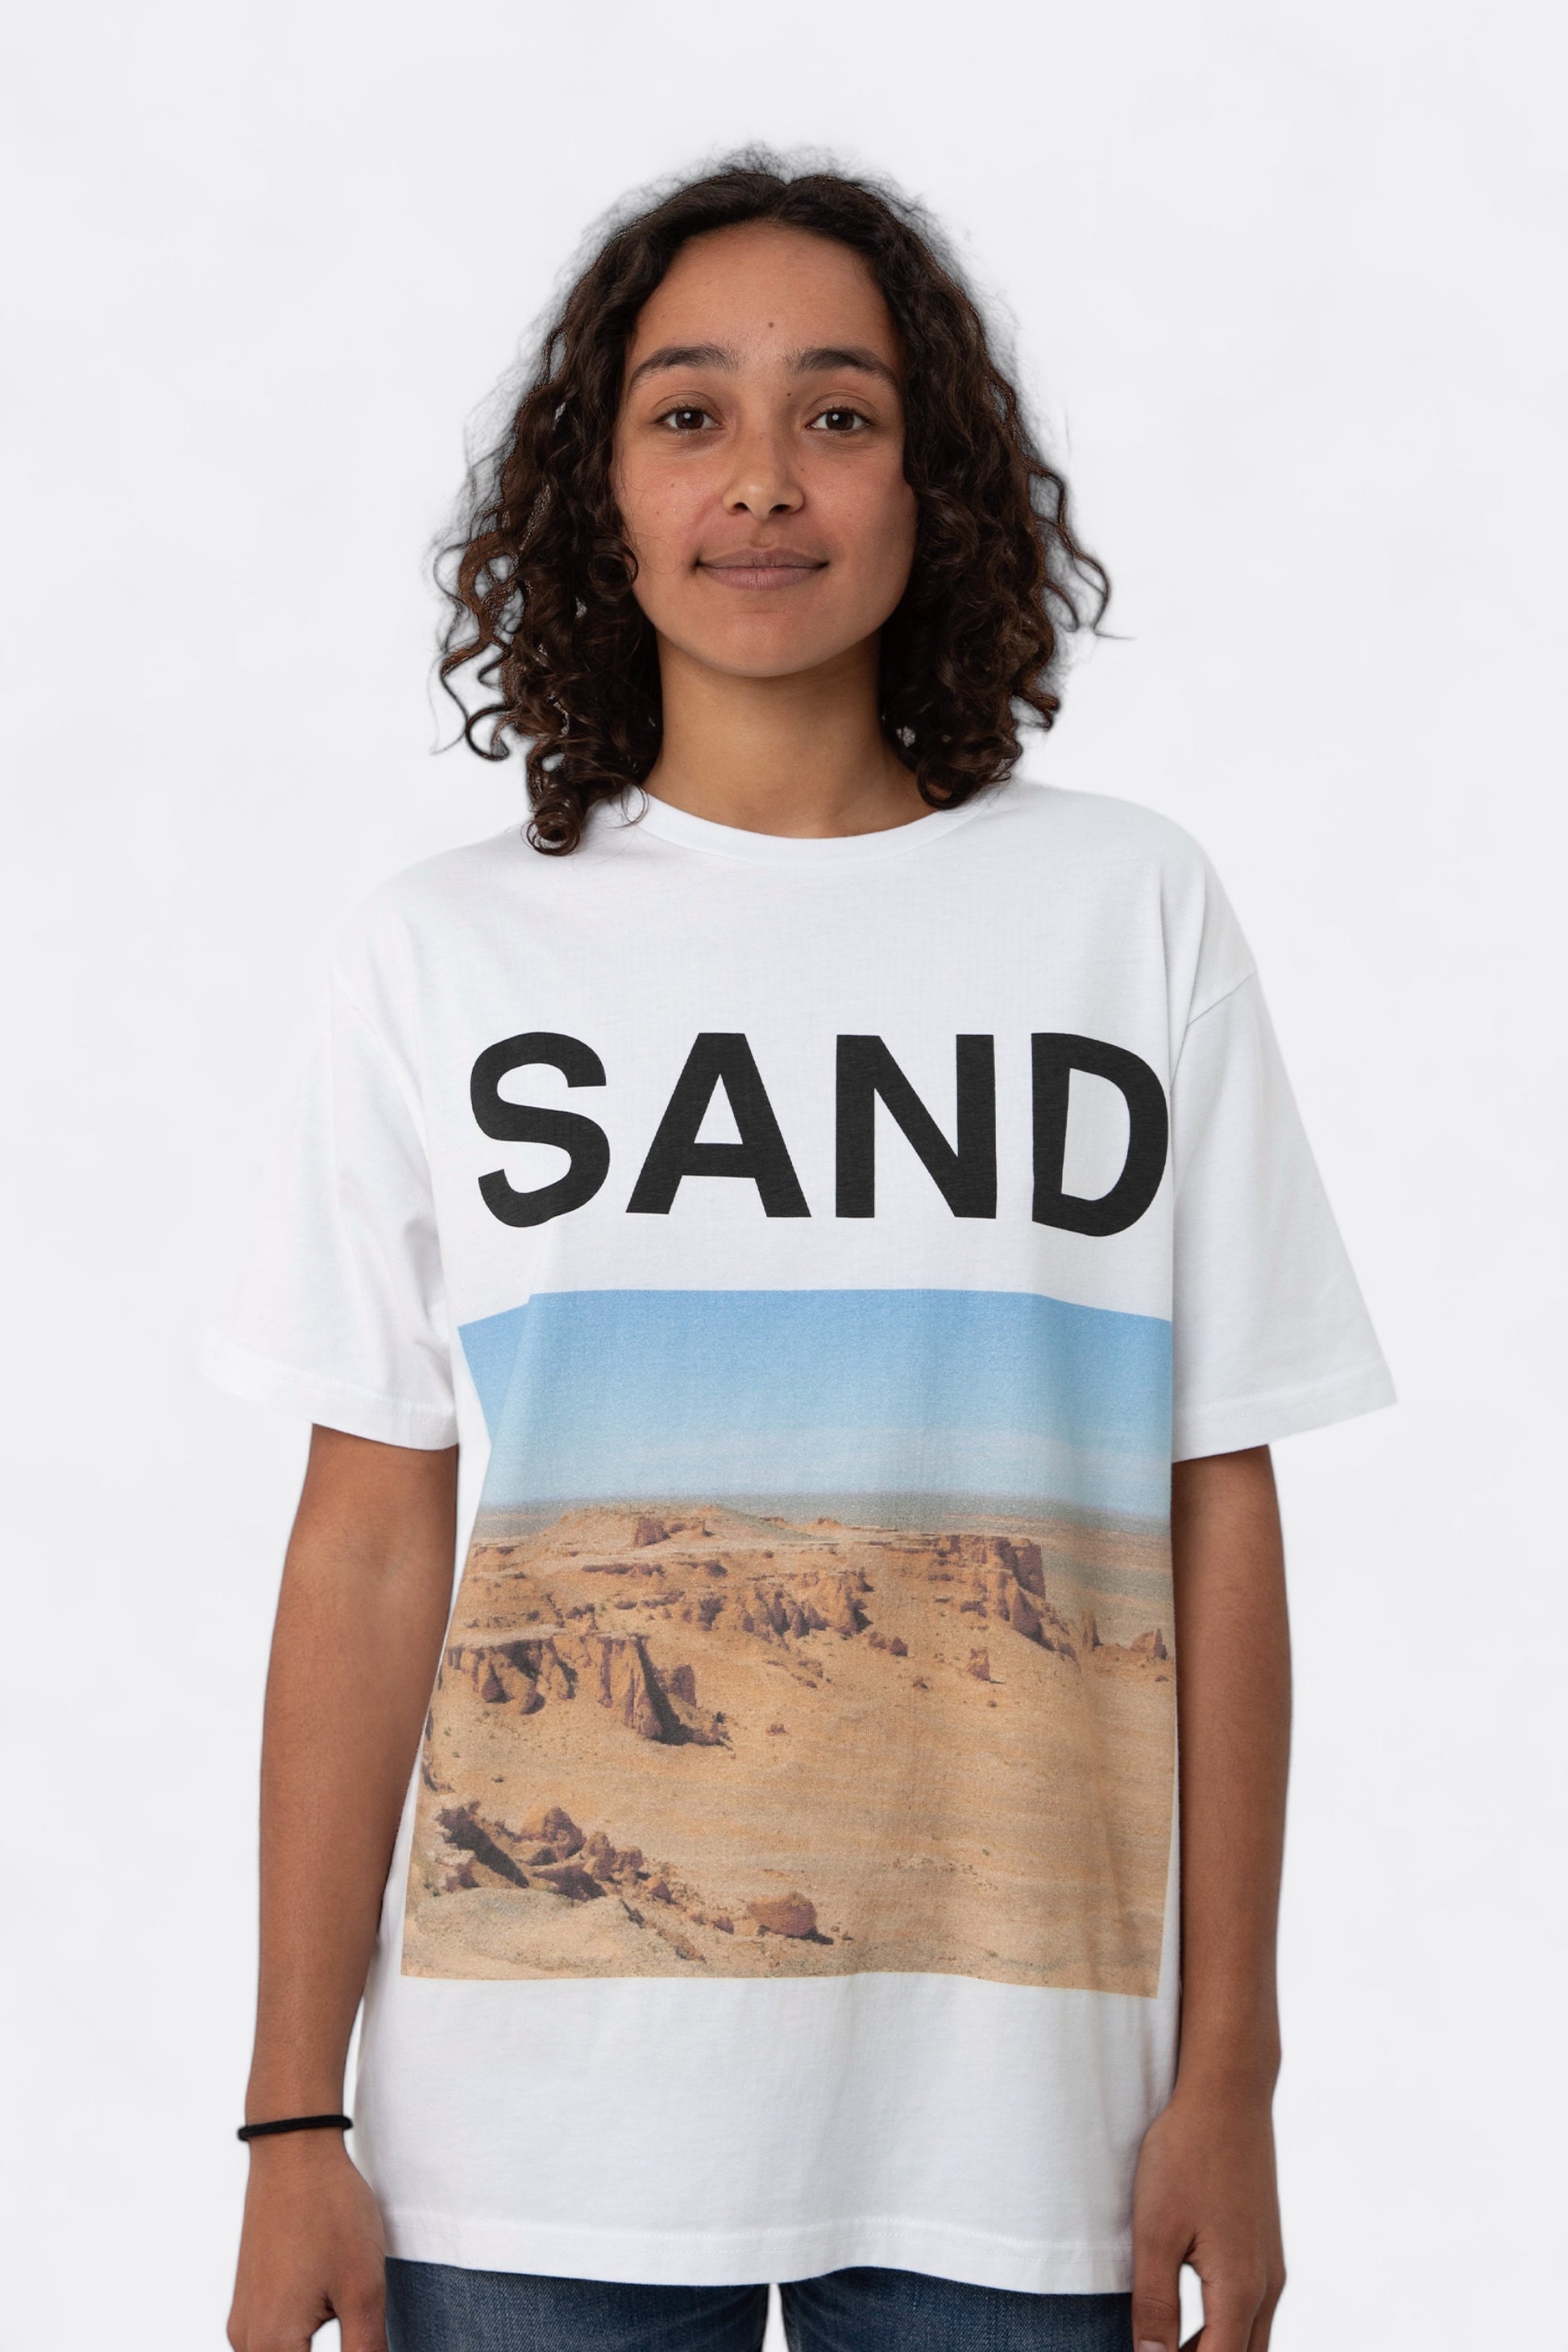 Public Possession - Sandwitch T-Shirt (White Digital Print)